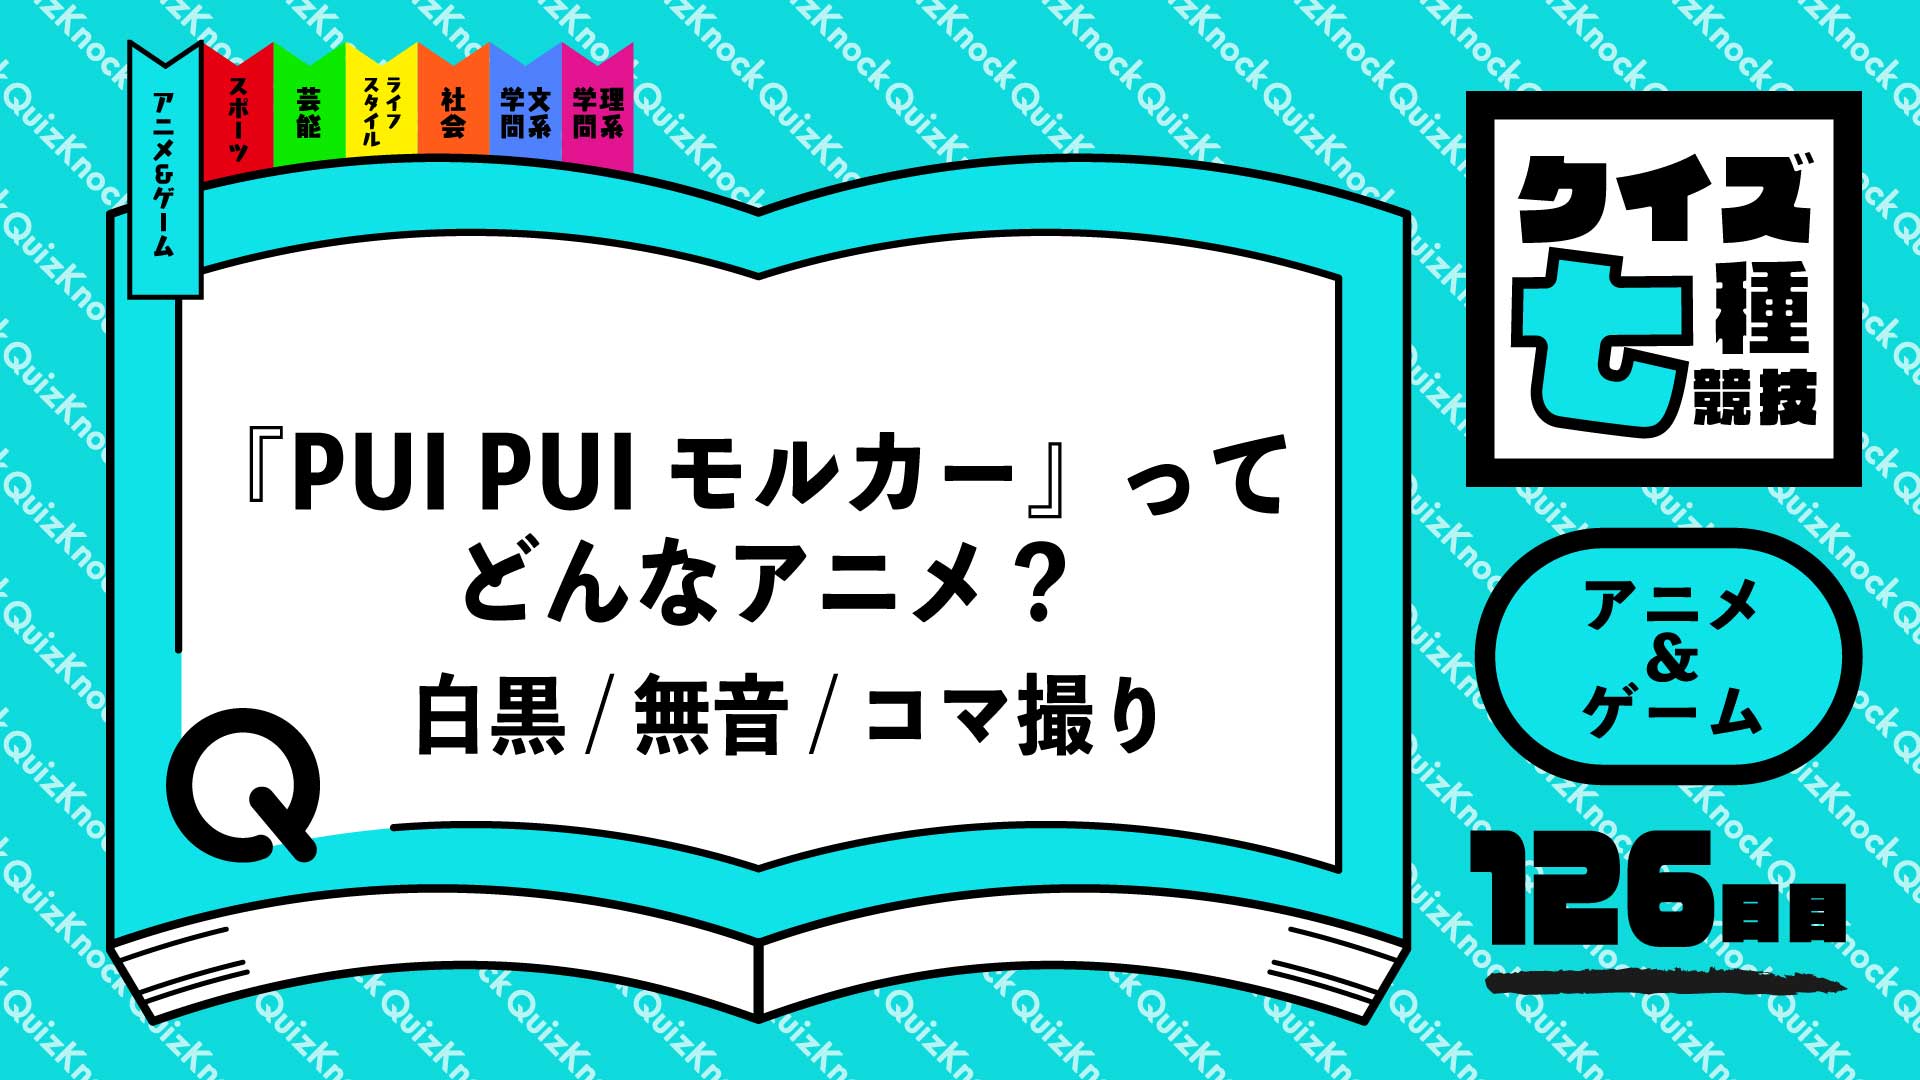 Pui Pui モルカー といえばどんなアニメ クイズ 七種競技